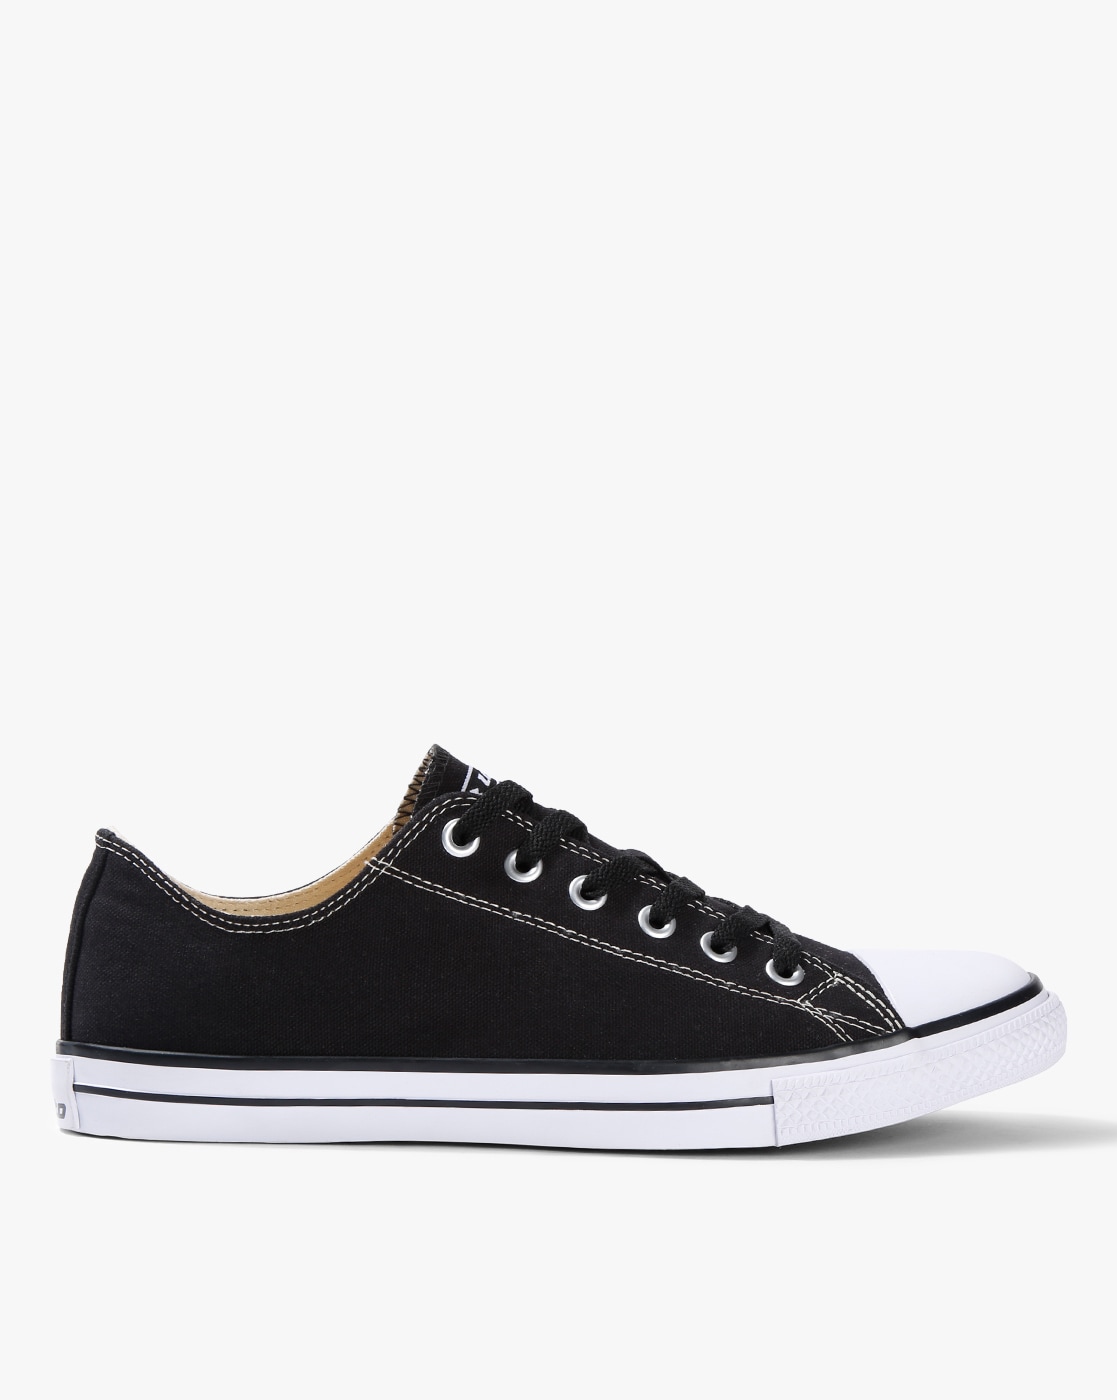 black casual canvas shoes